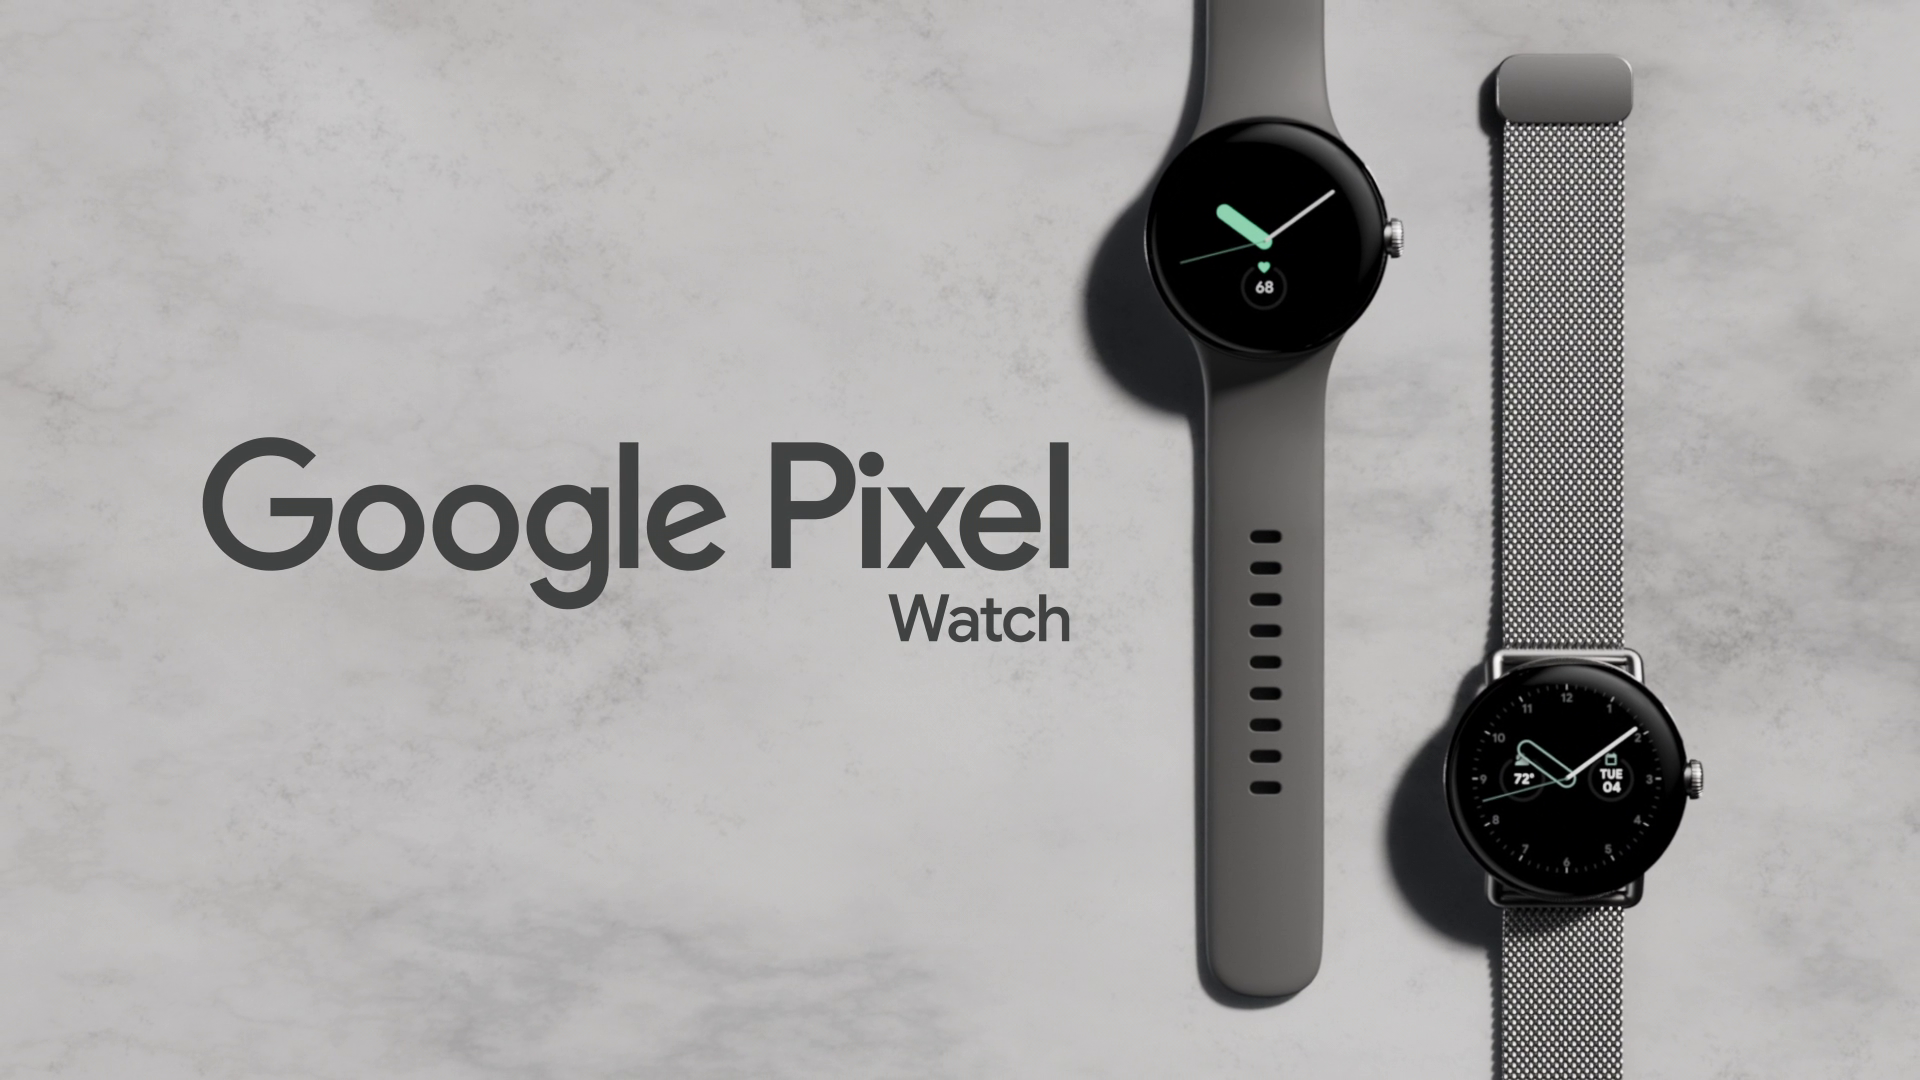 Google Pixel Watch – Colors, Specs, Pricing & Reviews